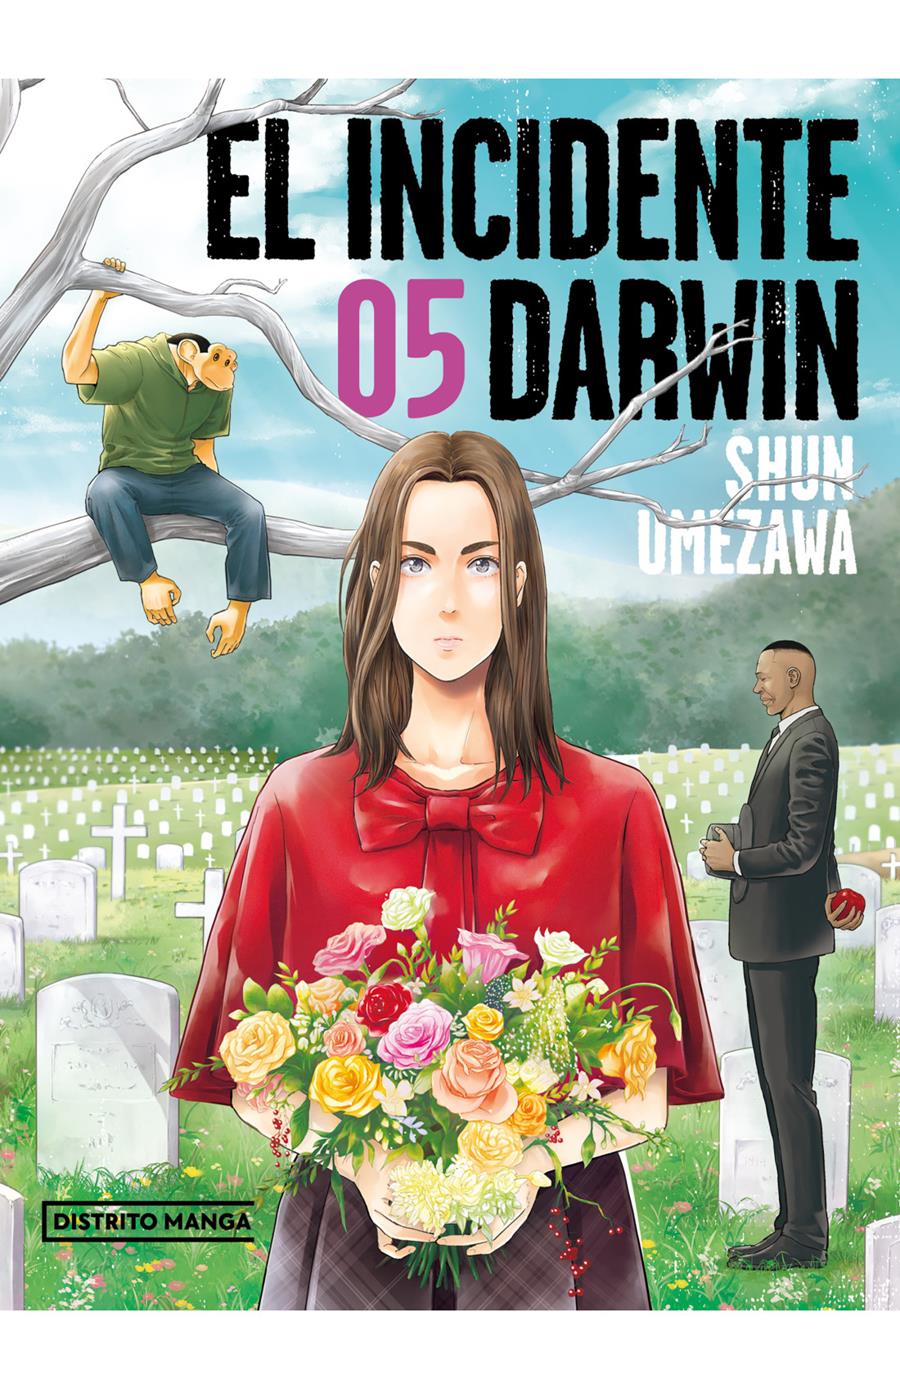 El incidente Darwin 05 | N0923-OTED12 | Shun Umezawa | Terra de Còmic - Tu tienda de cómics online especializada en cómics, manga y merchandising